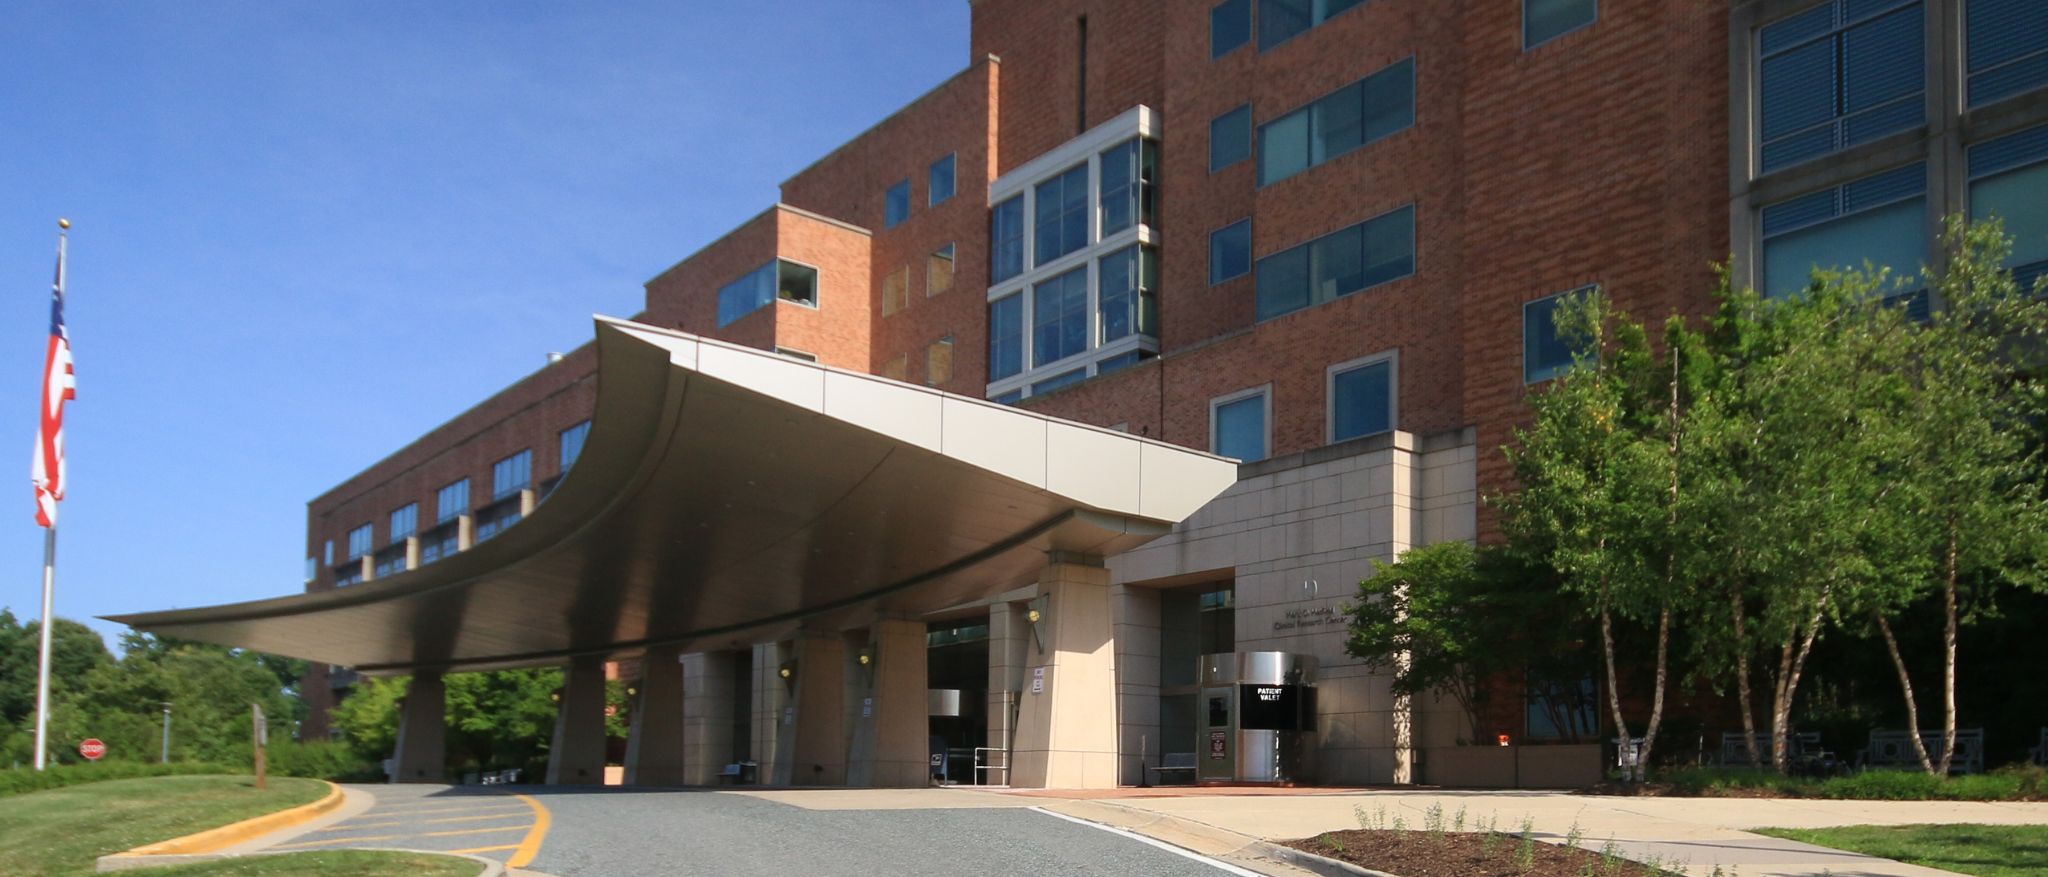 NIH Clinical Center entrance